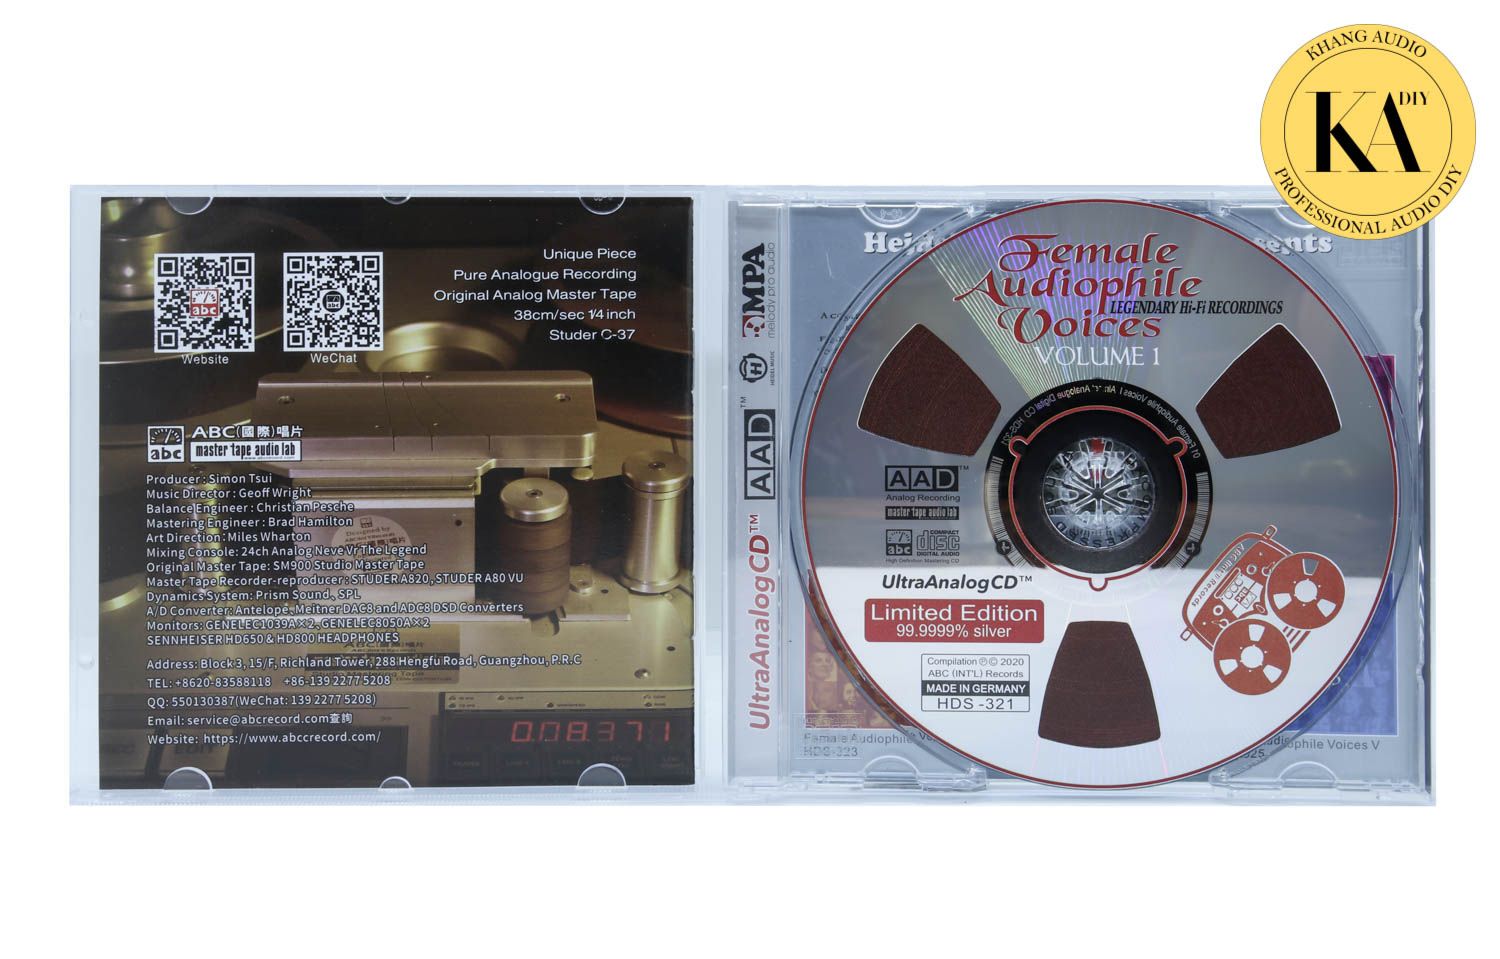 CD Female Audiophile Voices Vol.1